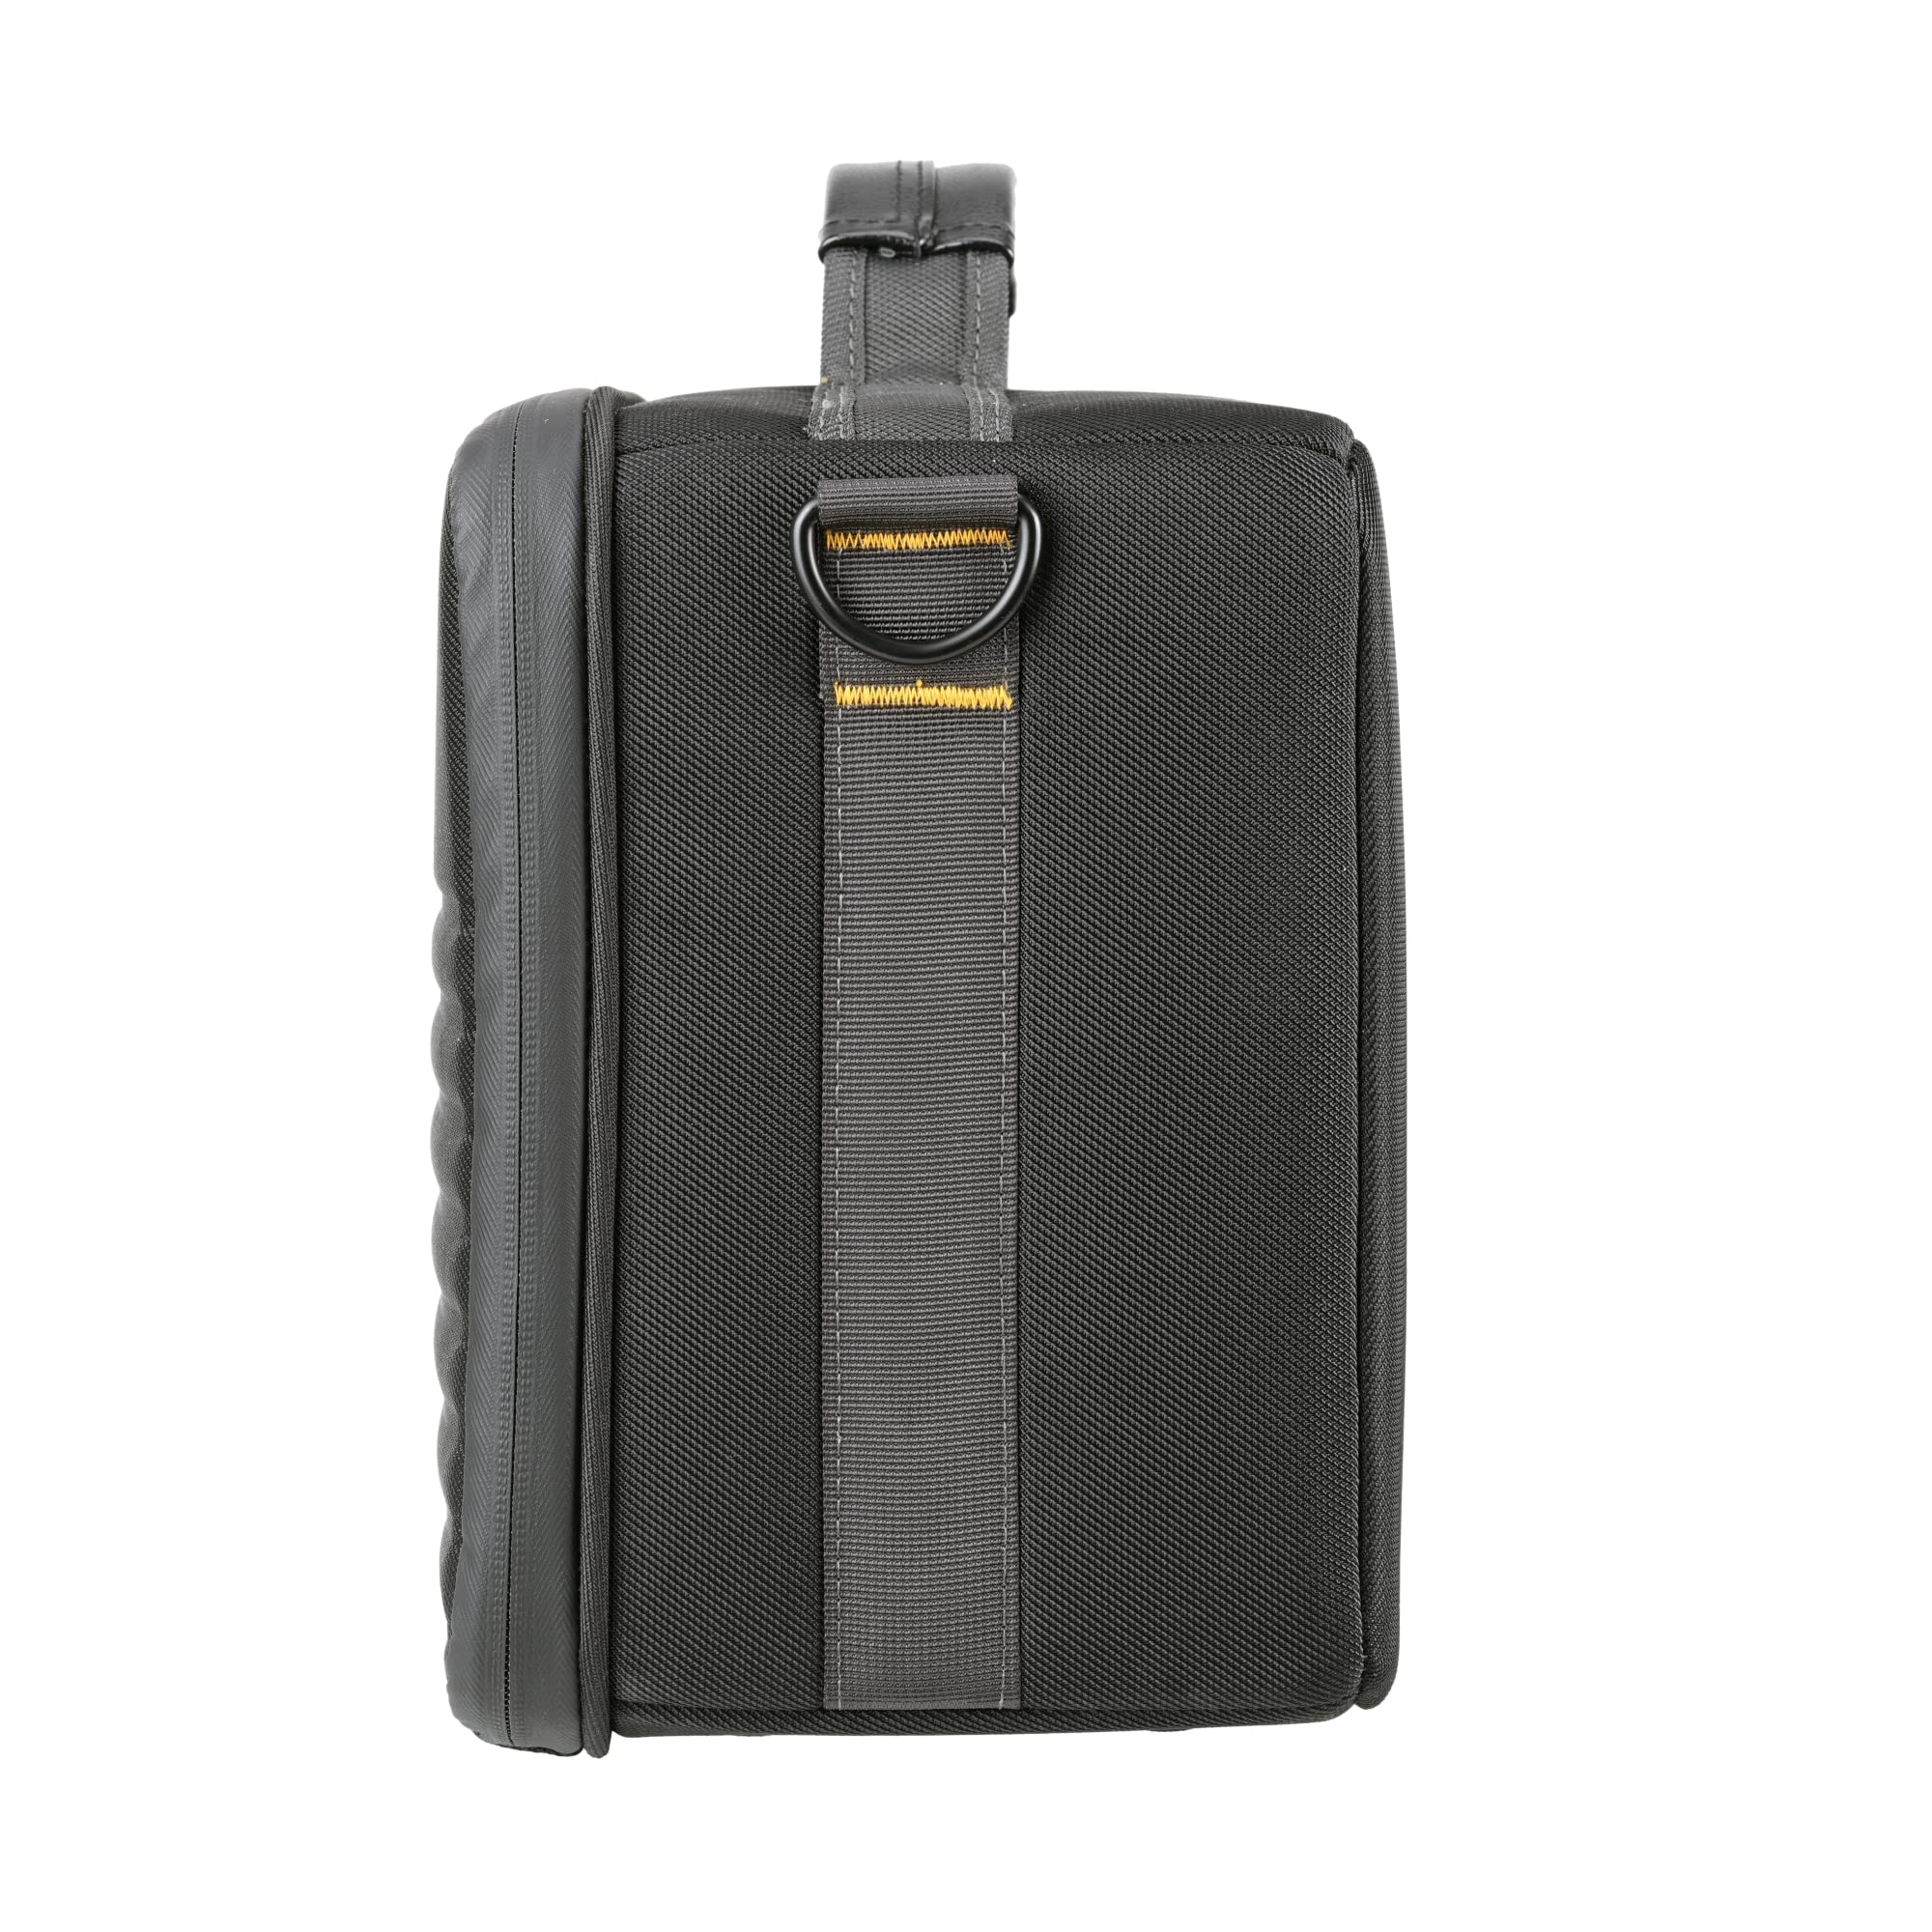 VANGUARD VEO BIB Divider S40 Customizeable Insert/Protection Bag for SLR DSLR Camera, Lenses, Accessories